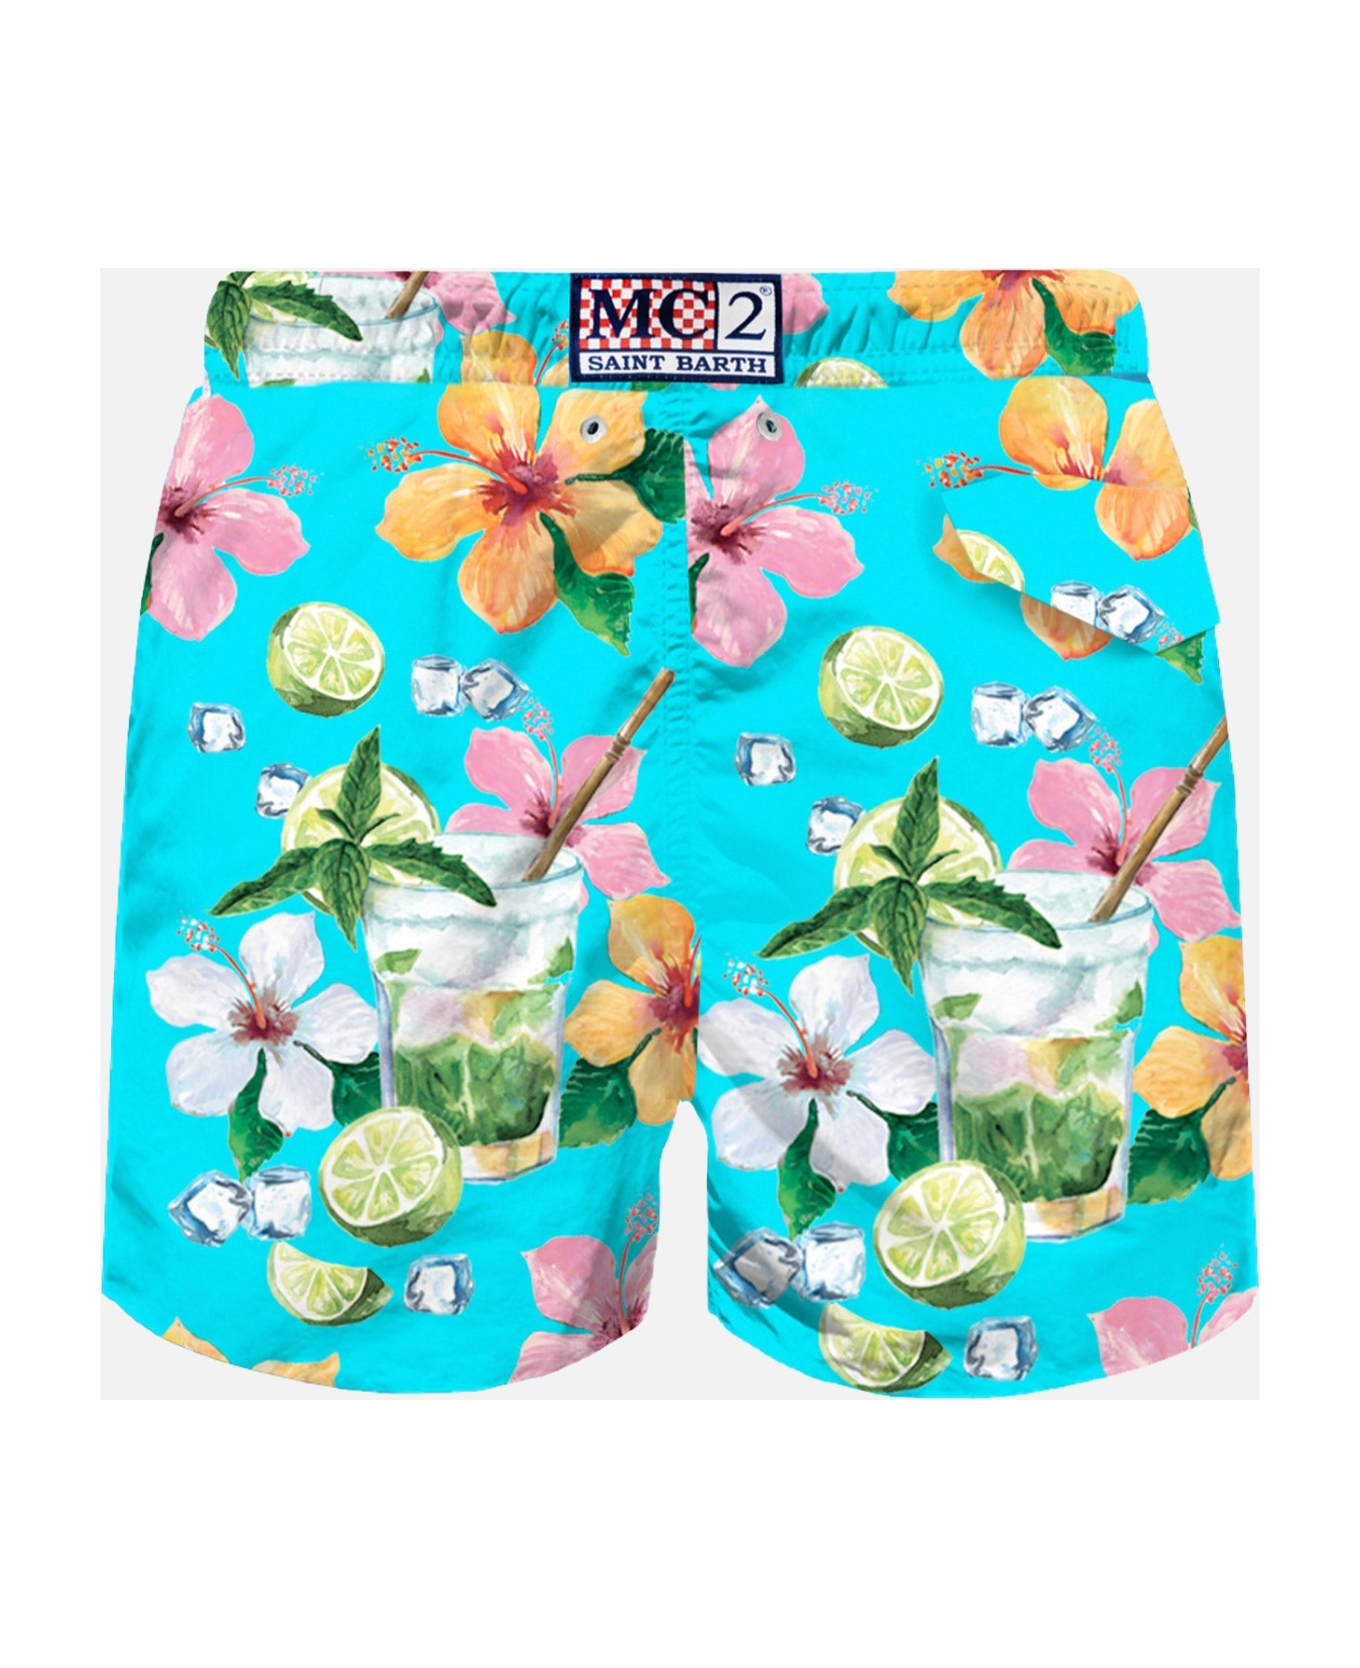 MC2 Saint Barth Man Light Fabric Swim Shorts With Mojito Print